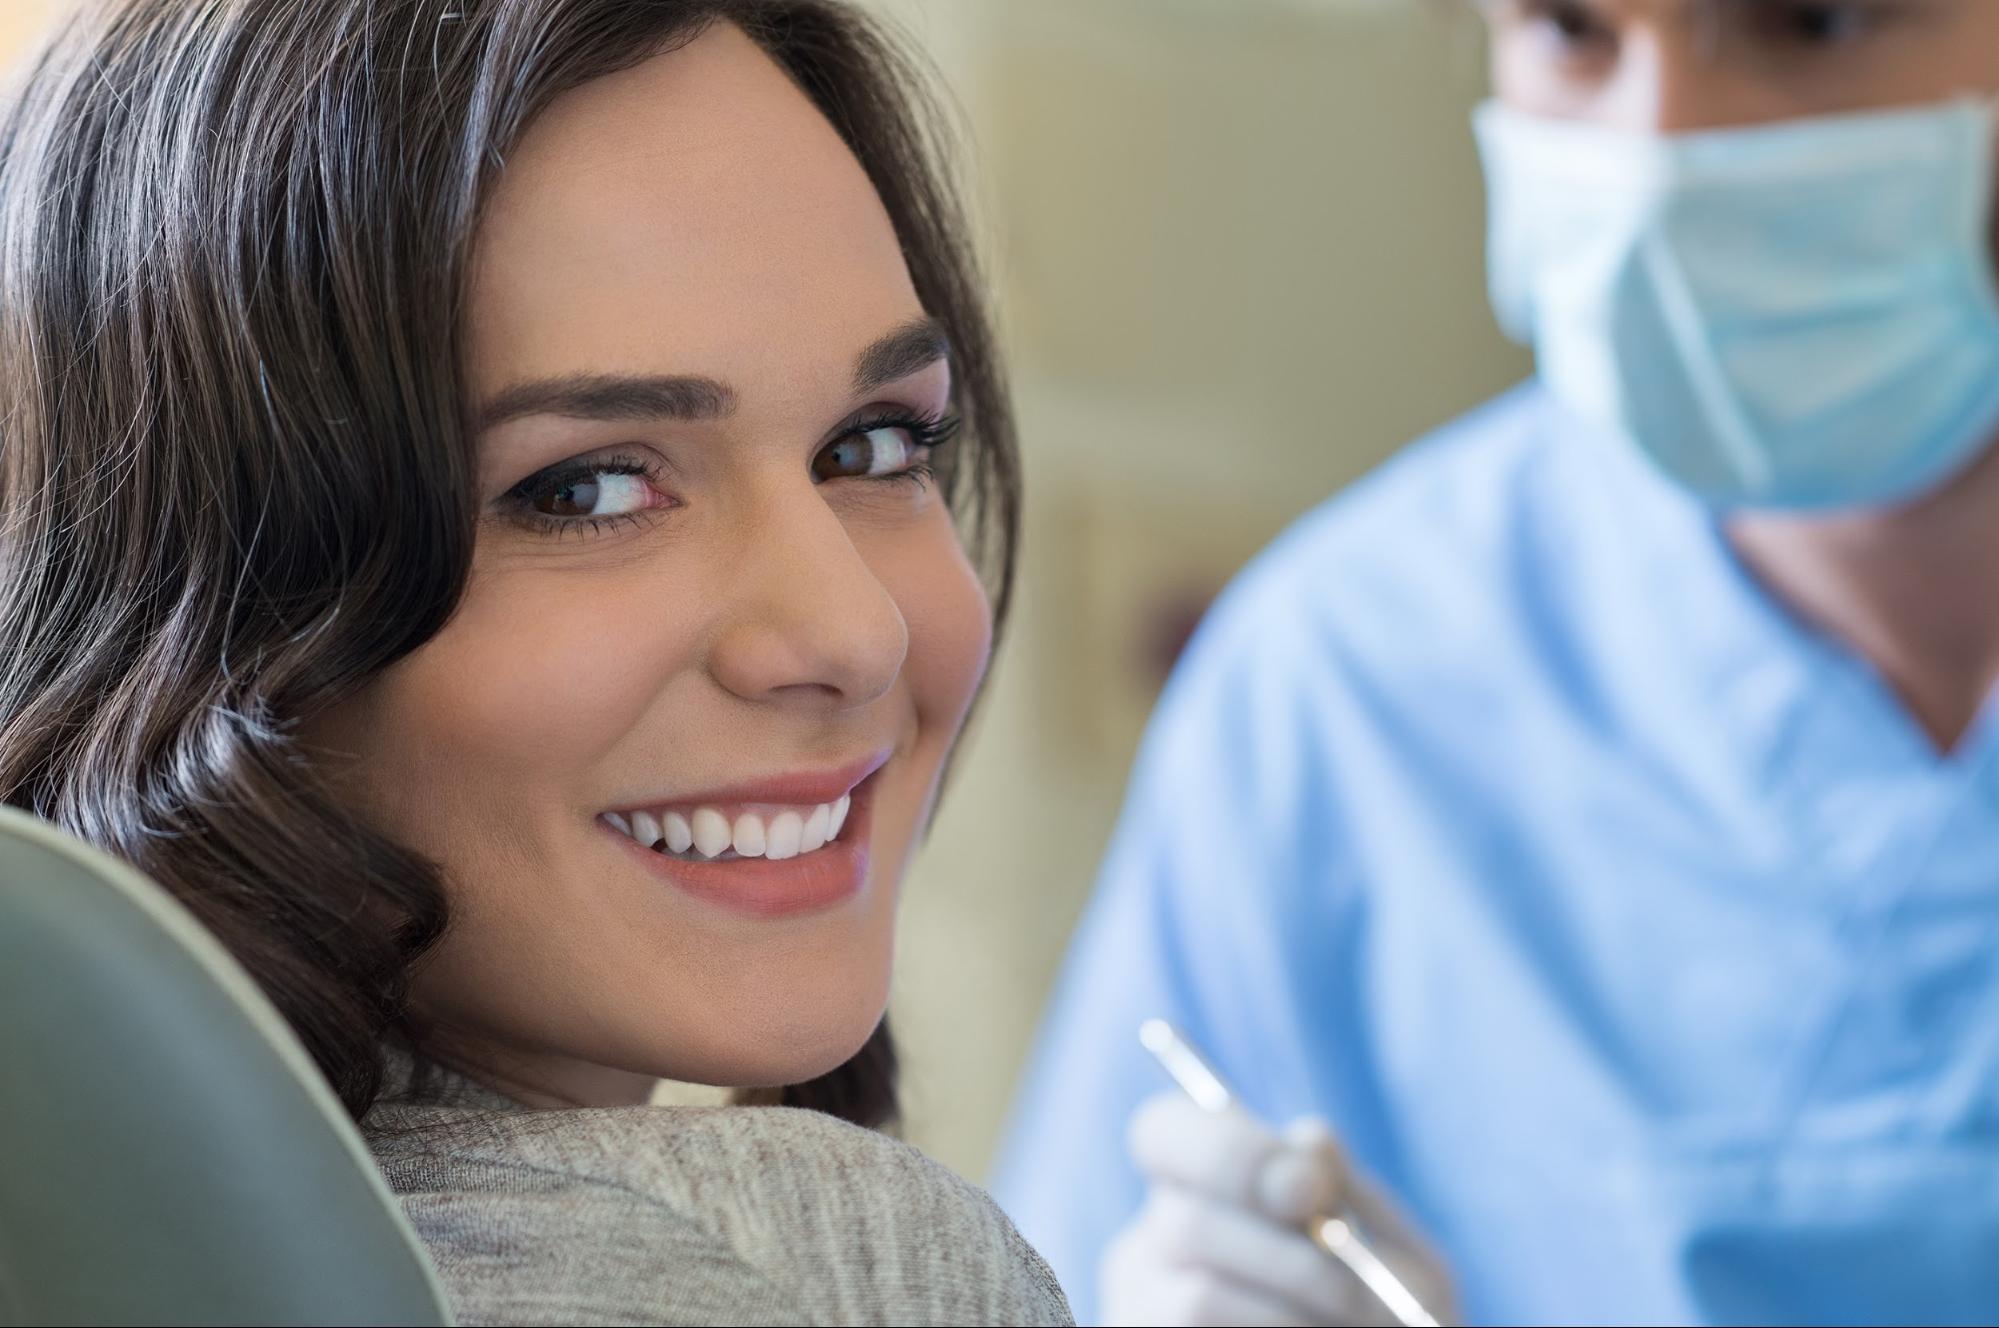 Advanced Orthodontics wisdom teeth removal